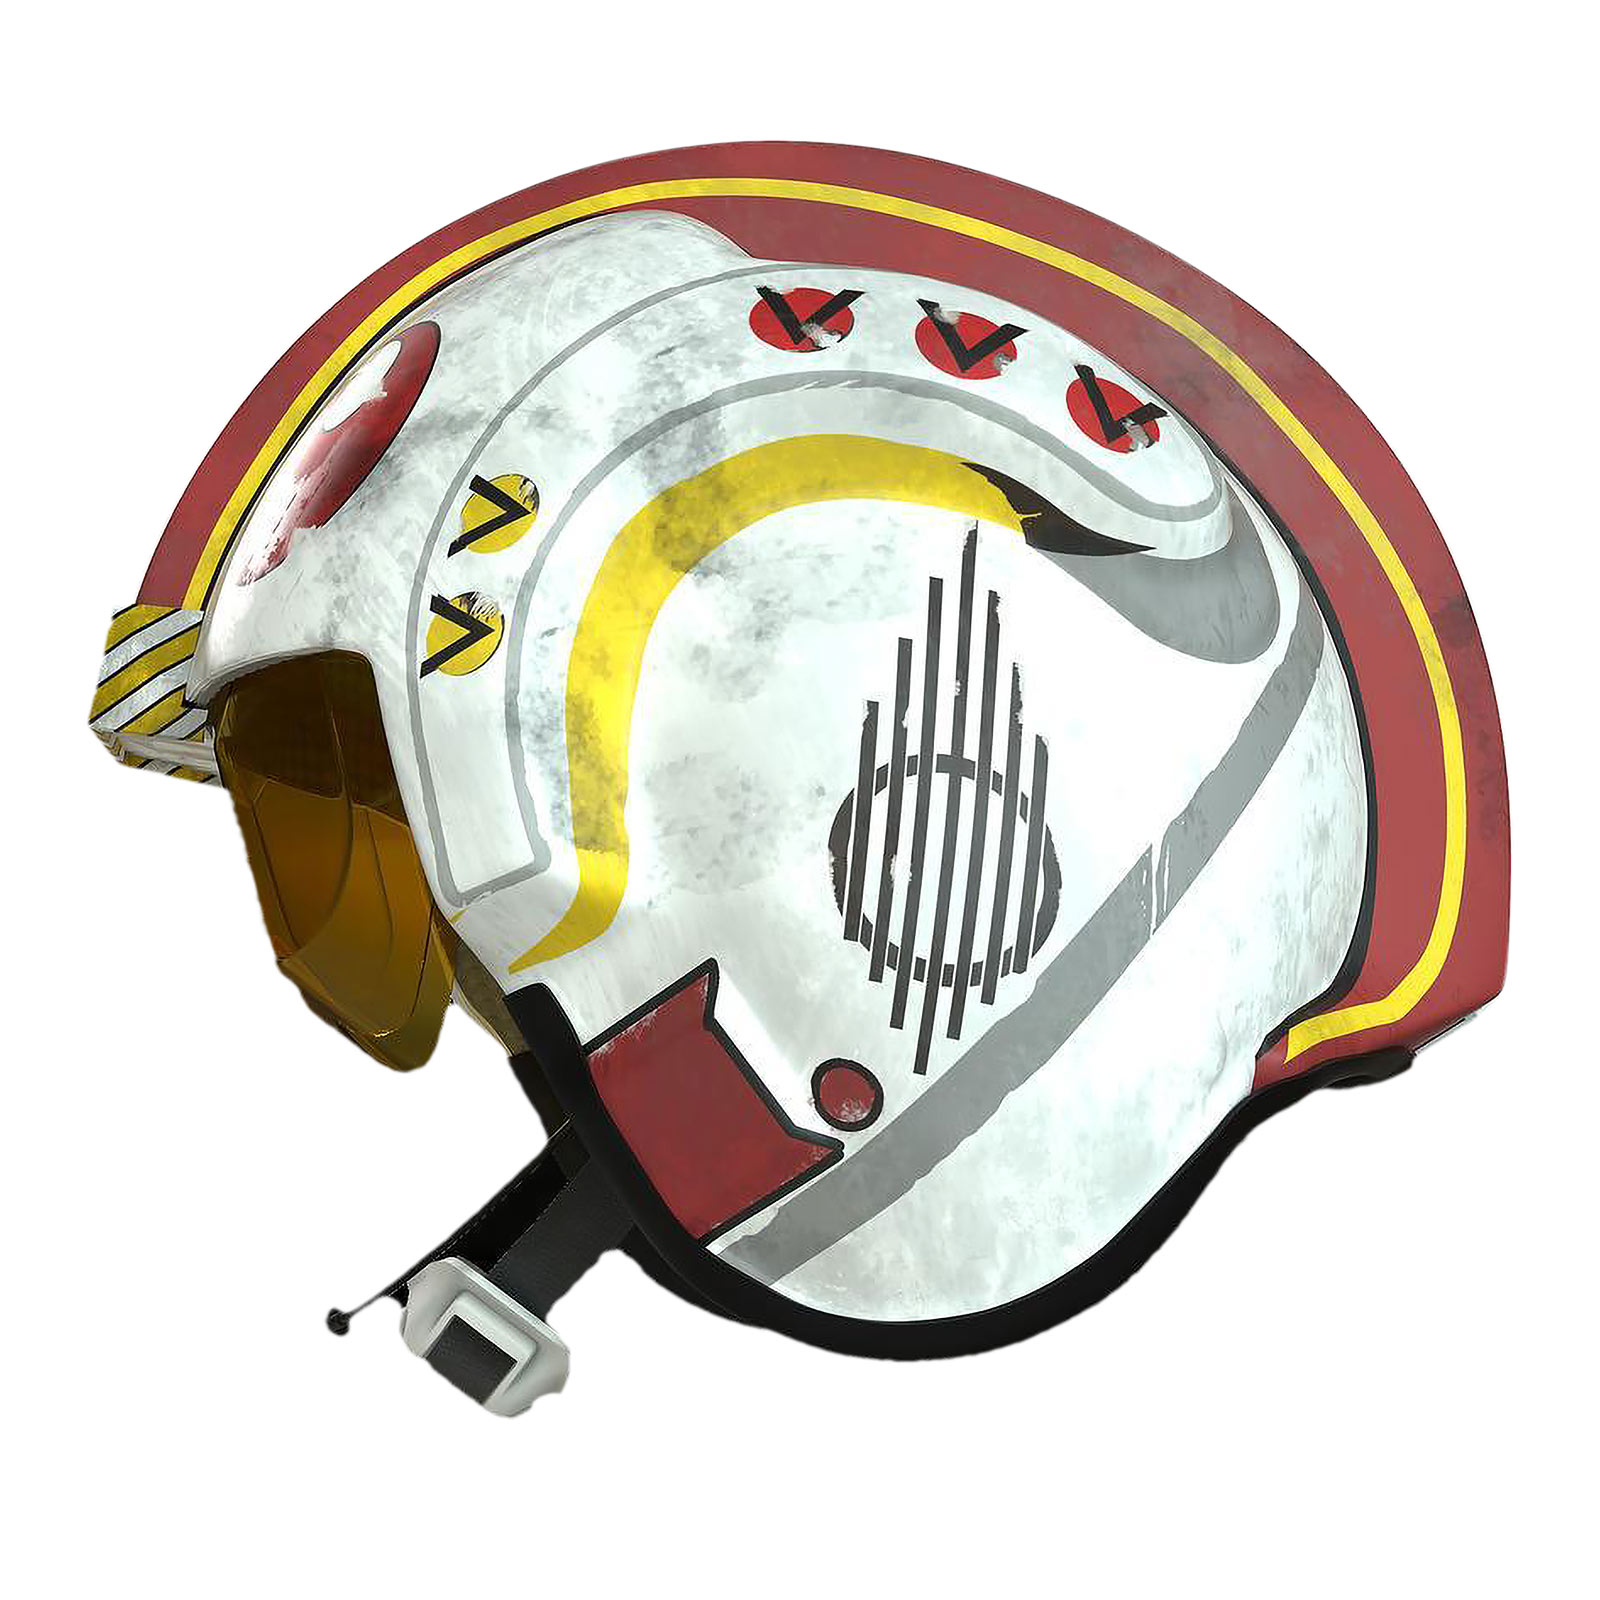 Star Wars - Luke Skywalker Helmet Replica with Light and Sound Effects